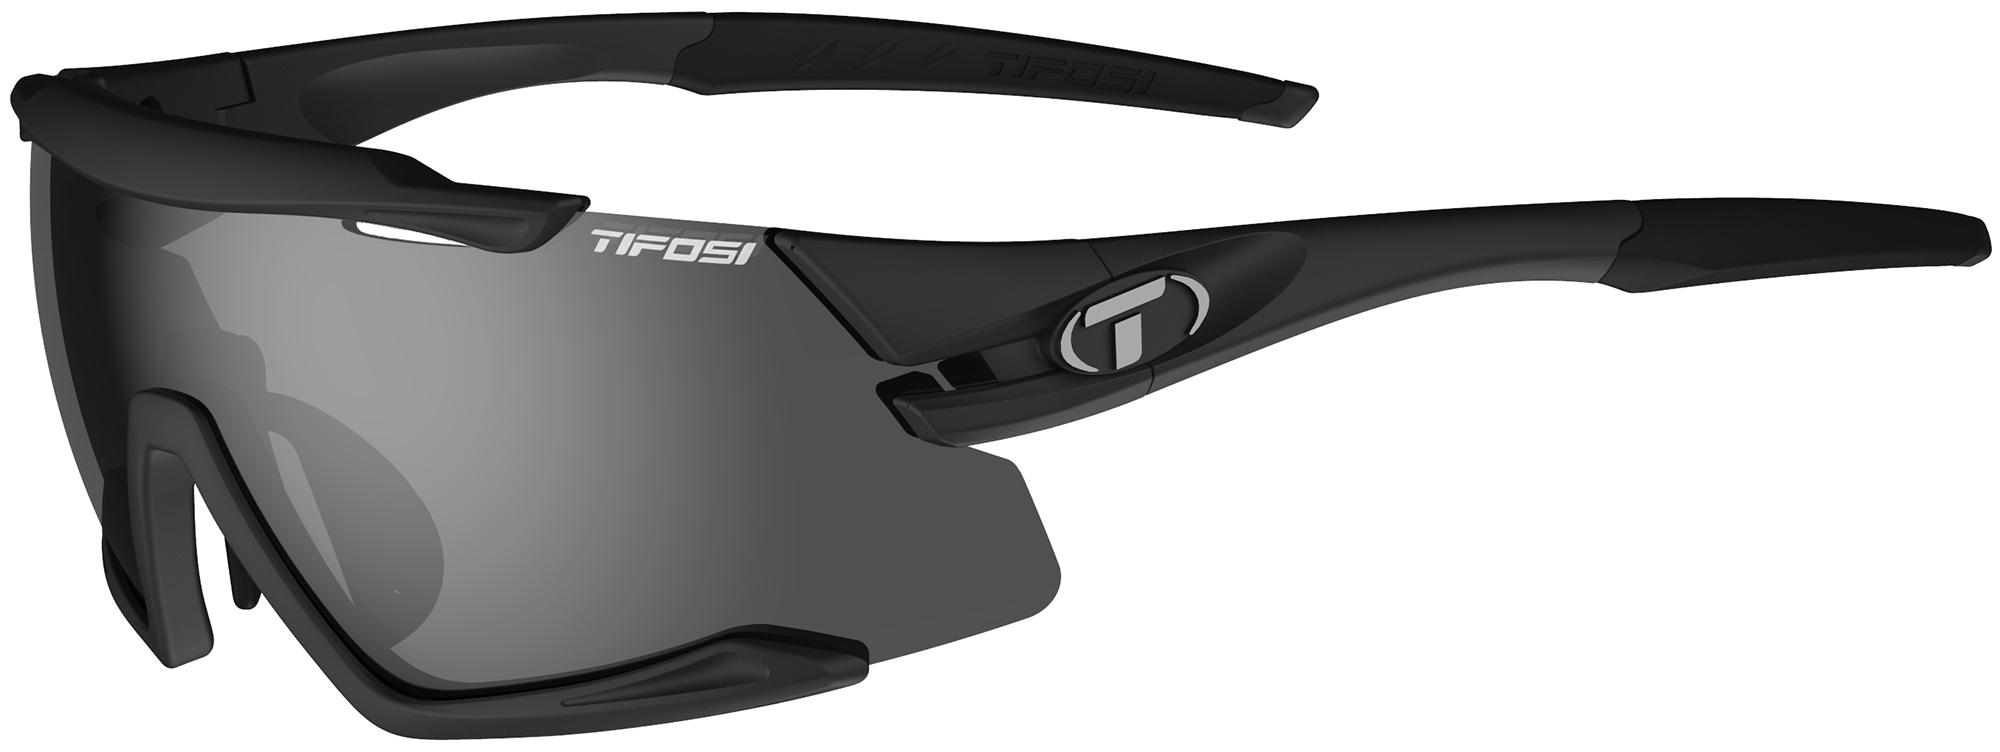 Tifosi Eyewear Aethon 3 Lens Interchangeable Sunglasses (black) - Matte Black